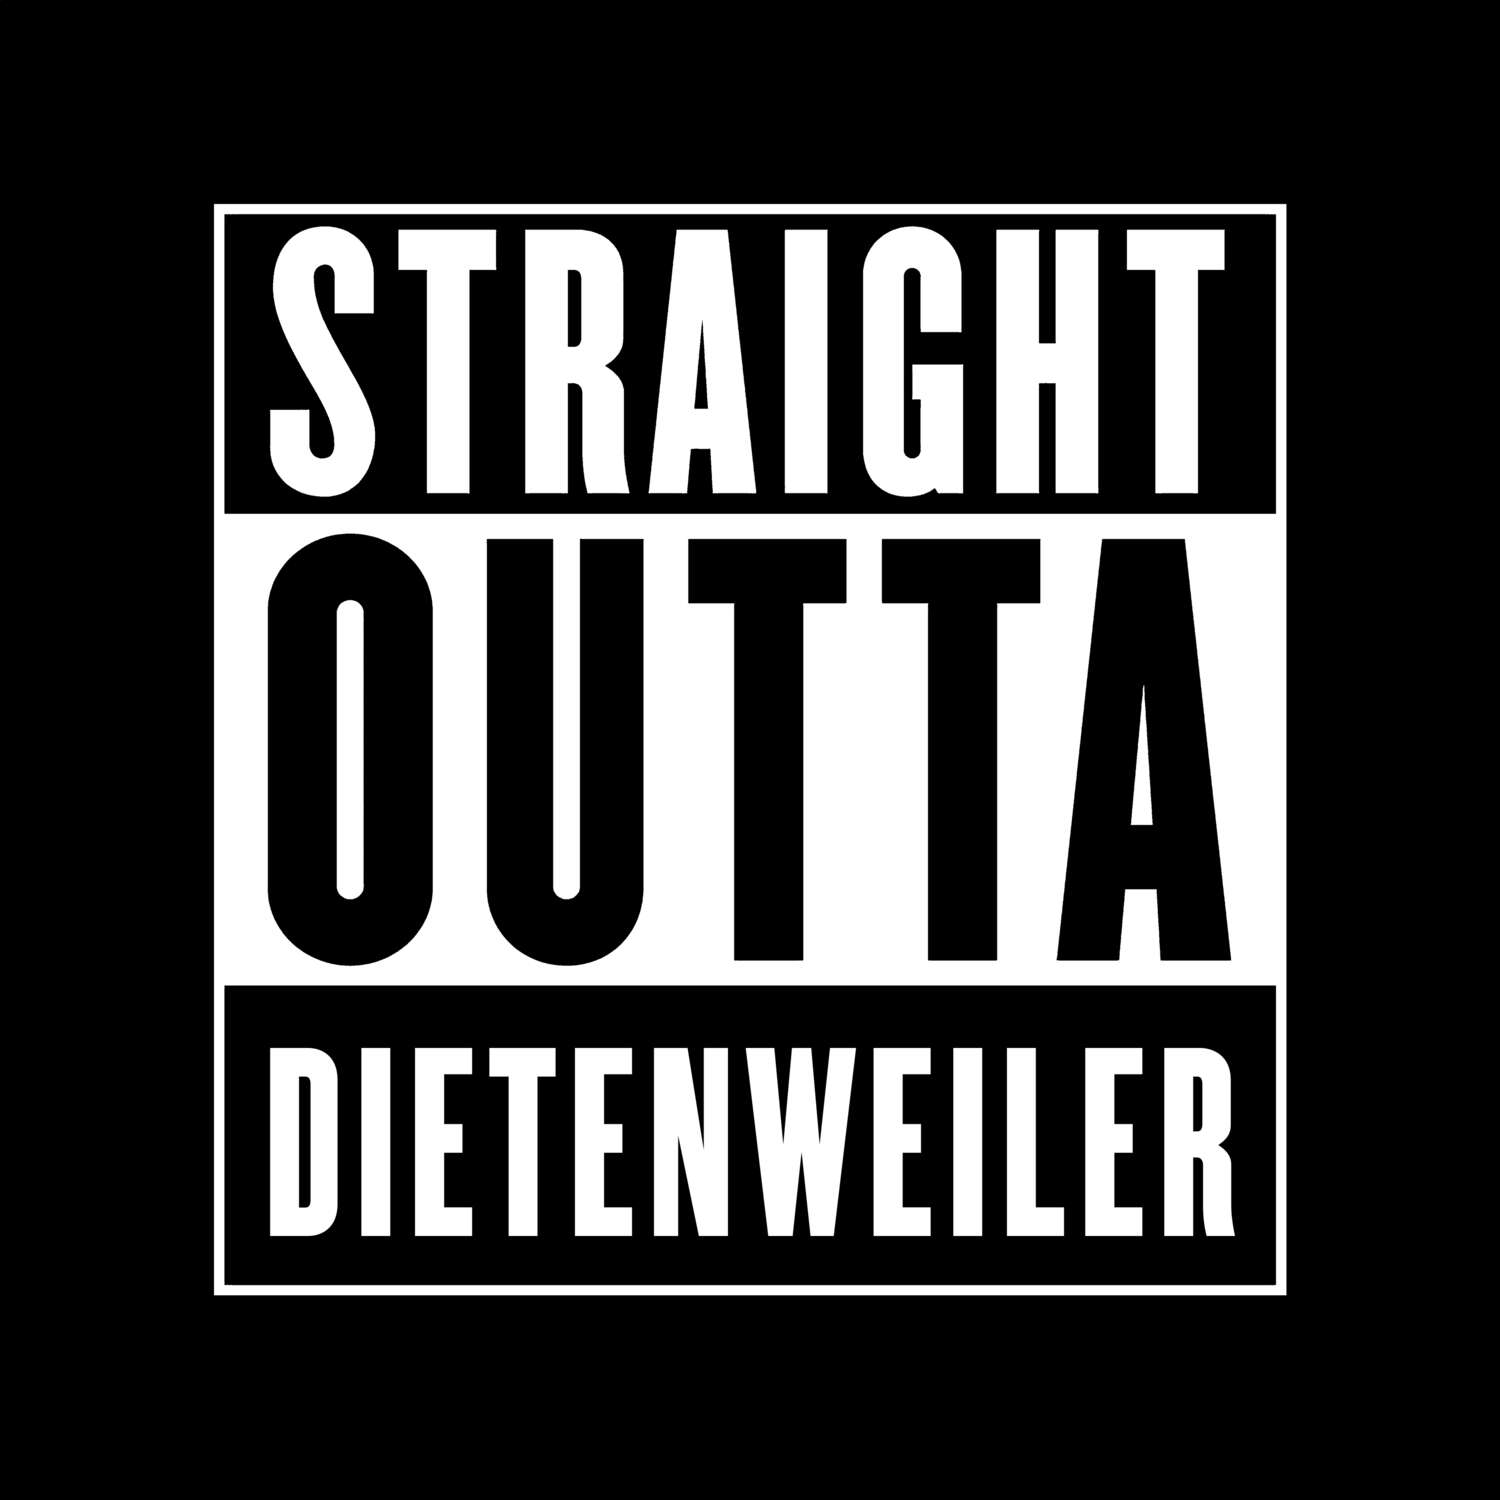 Dietenweiler T-Shirt »Straight Outta«